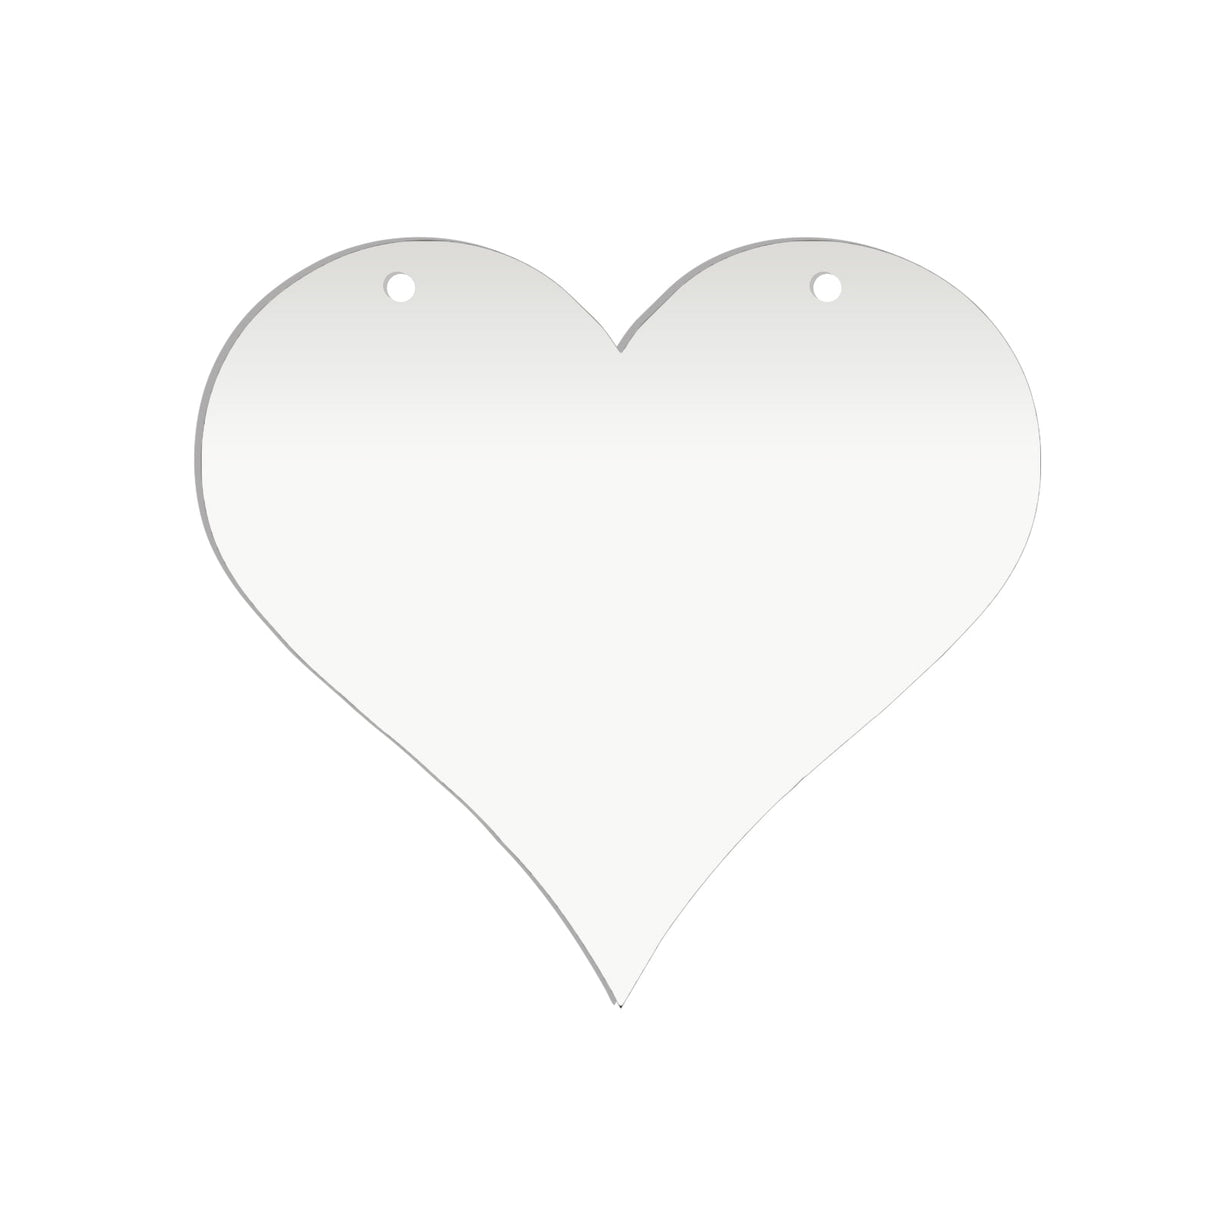 Laserworksuk craft disc Acrylic Heart Blanks (10cm Pack of 5)